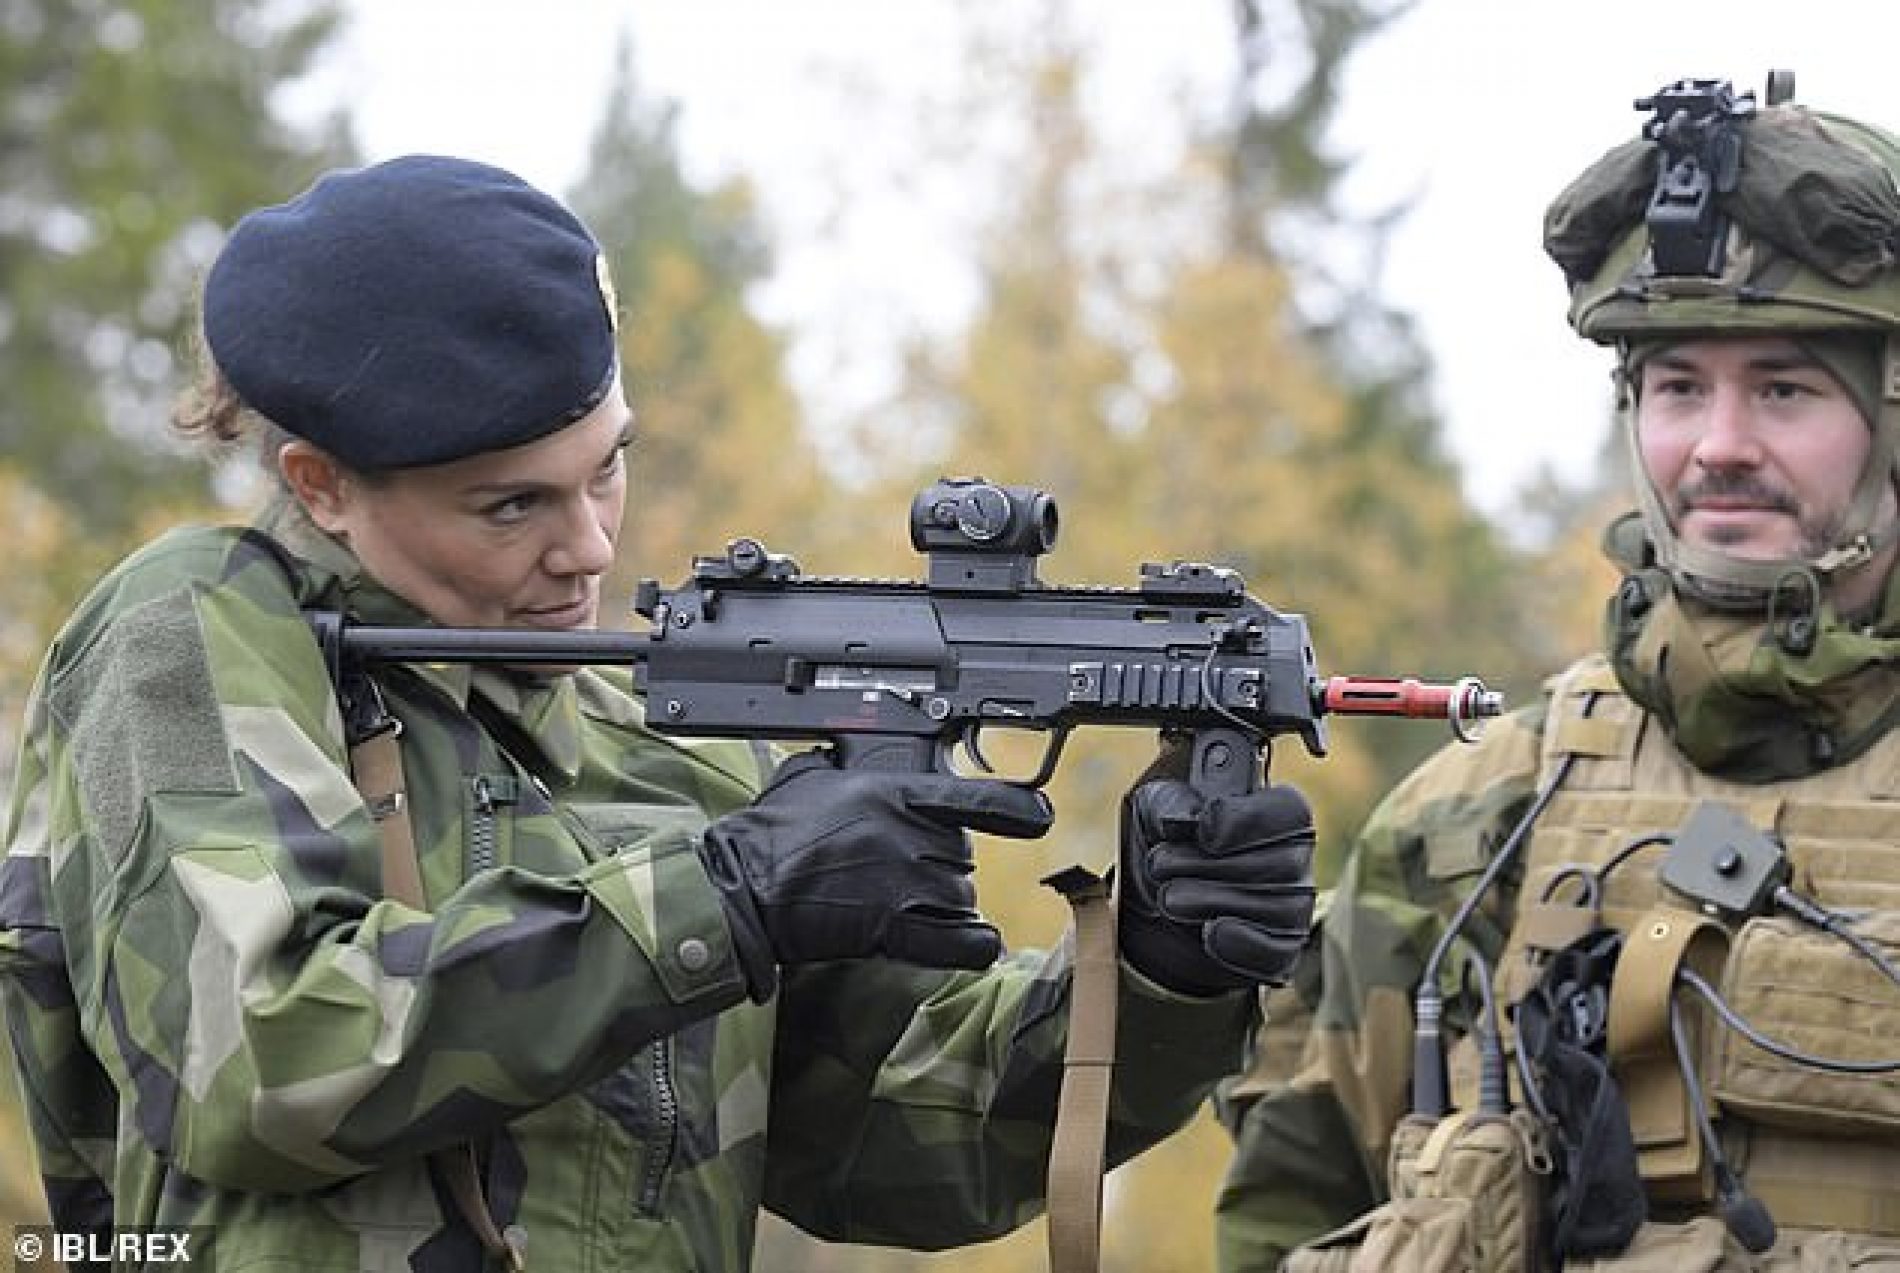 Švedski ministar odbrane: “Spremni smo braniti Švedsku”